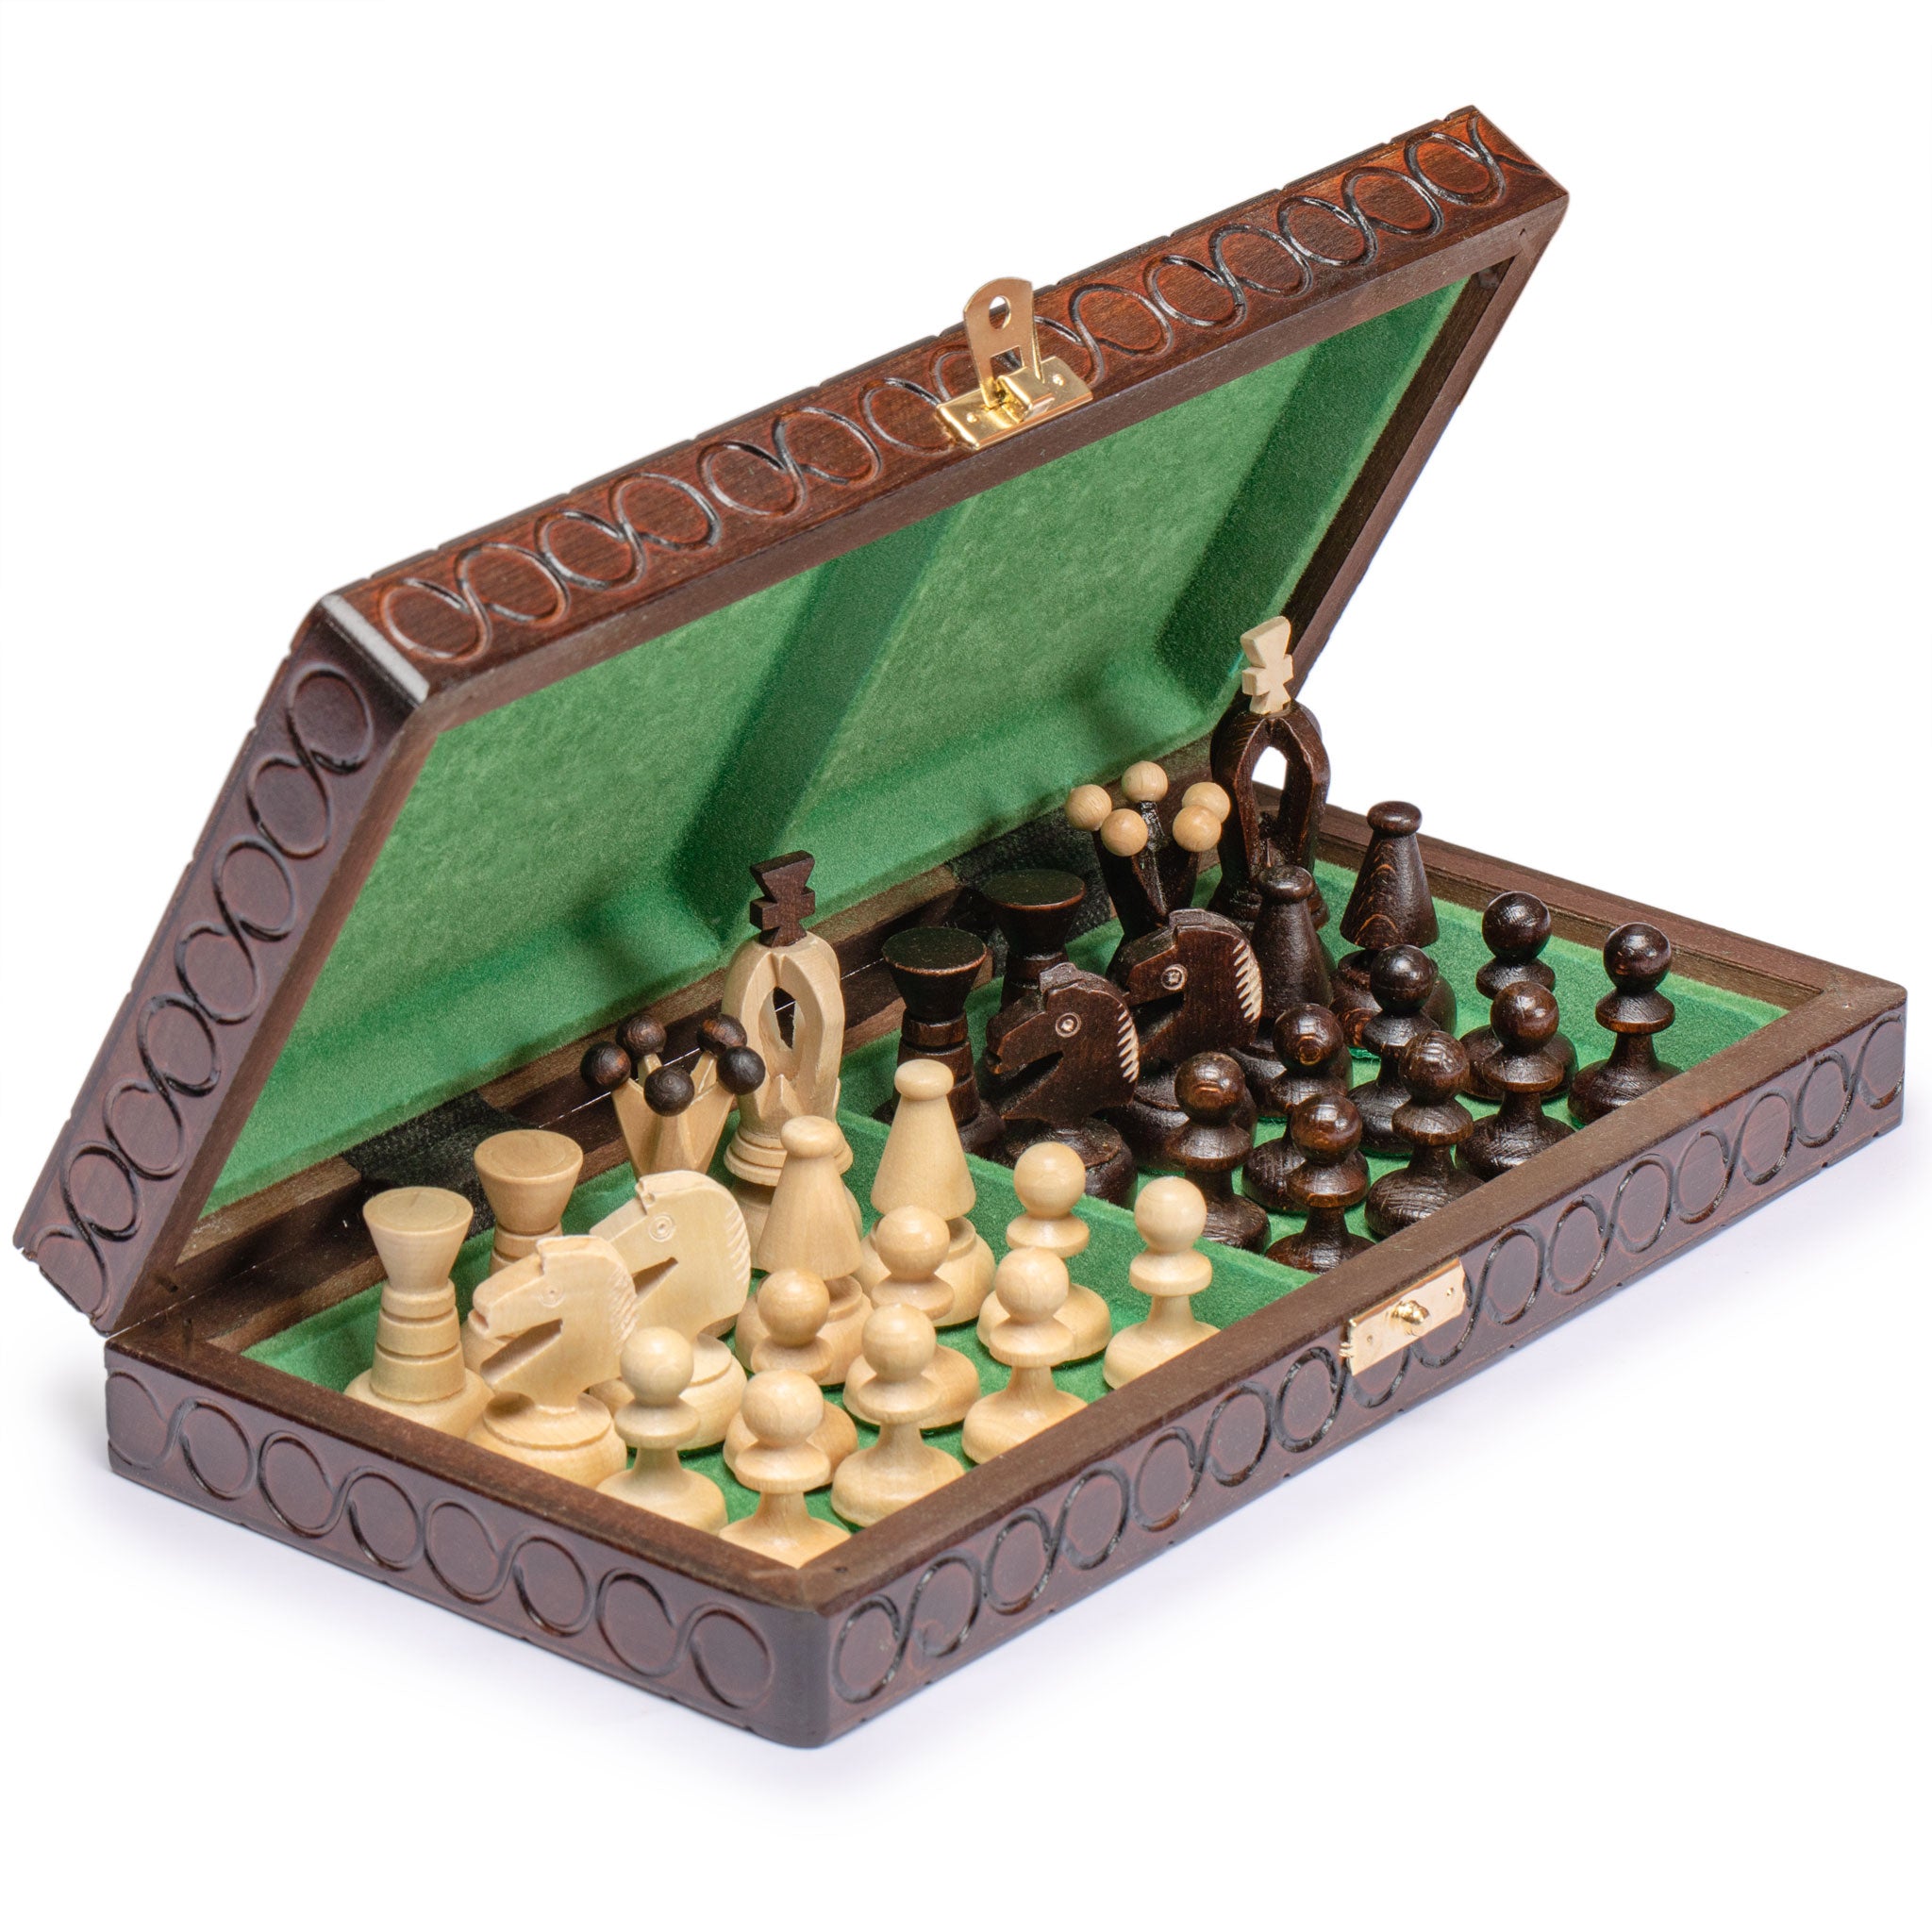 Husaria European International Chess Wooden Game Set, "King's Classic" - 11.3" Small Size Chess Set-Husaria